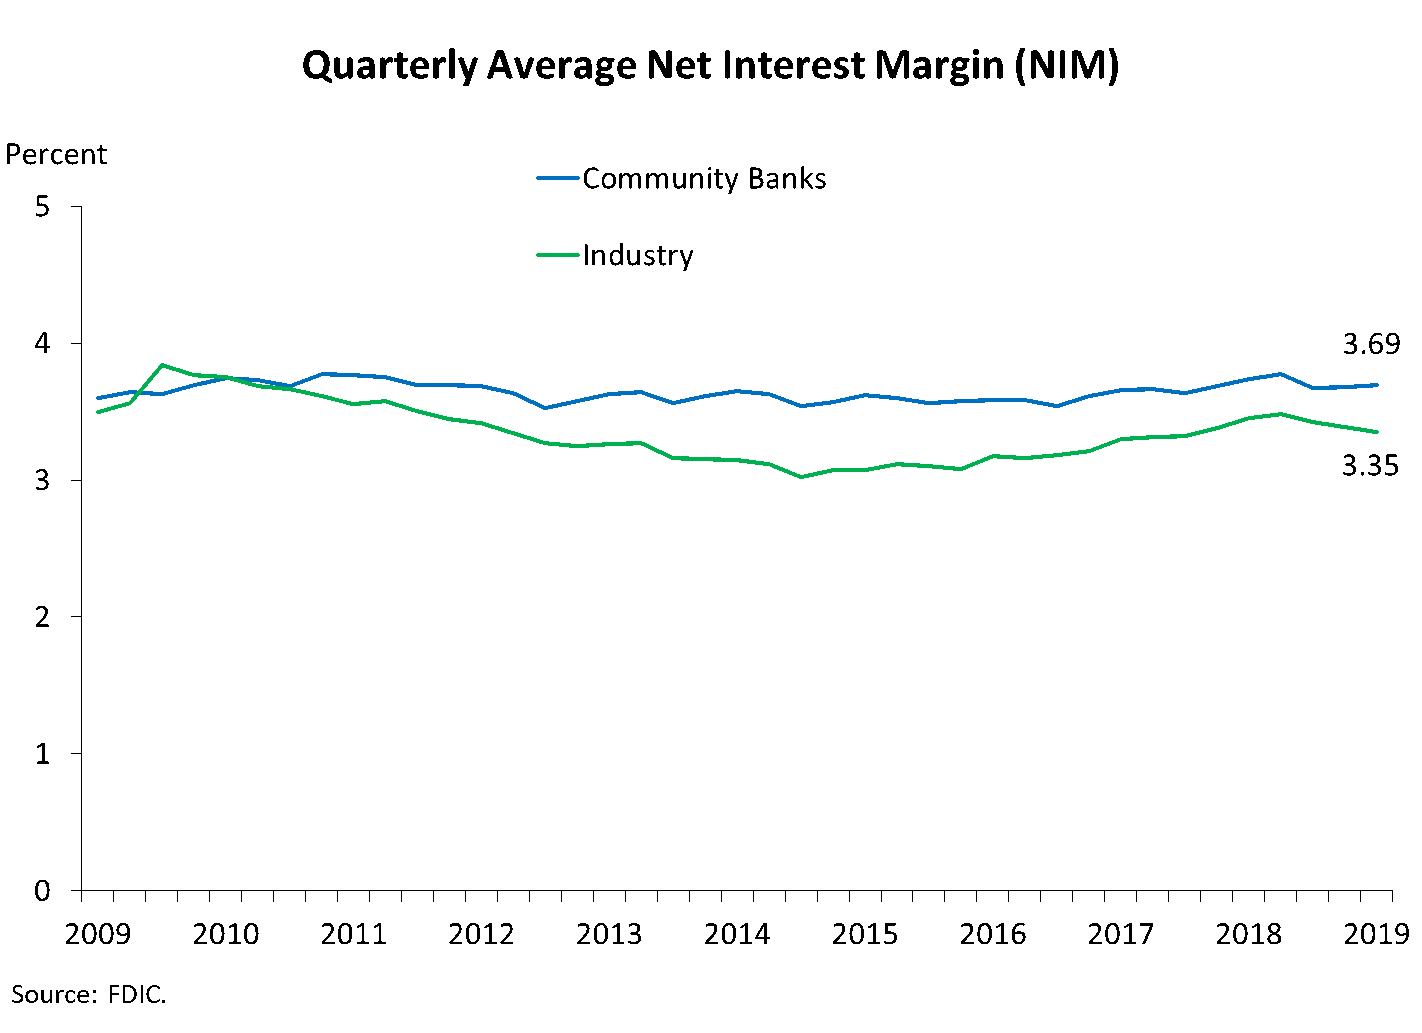 Chart 3: Quarterly Average Net Interest Margin (NIM)